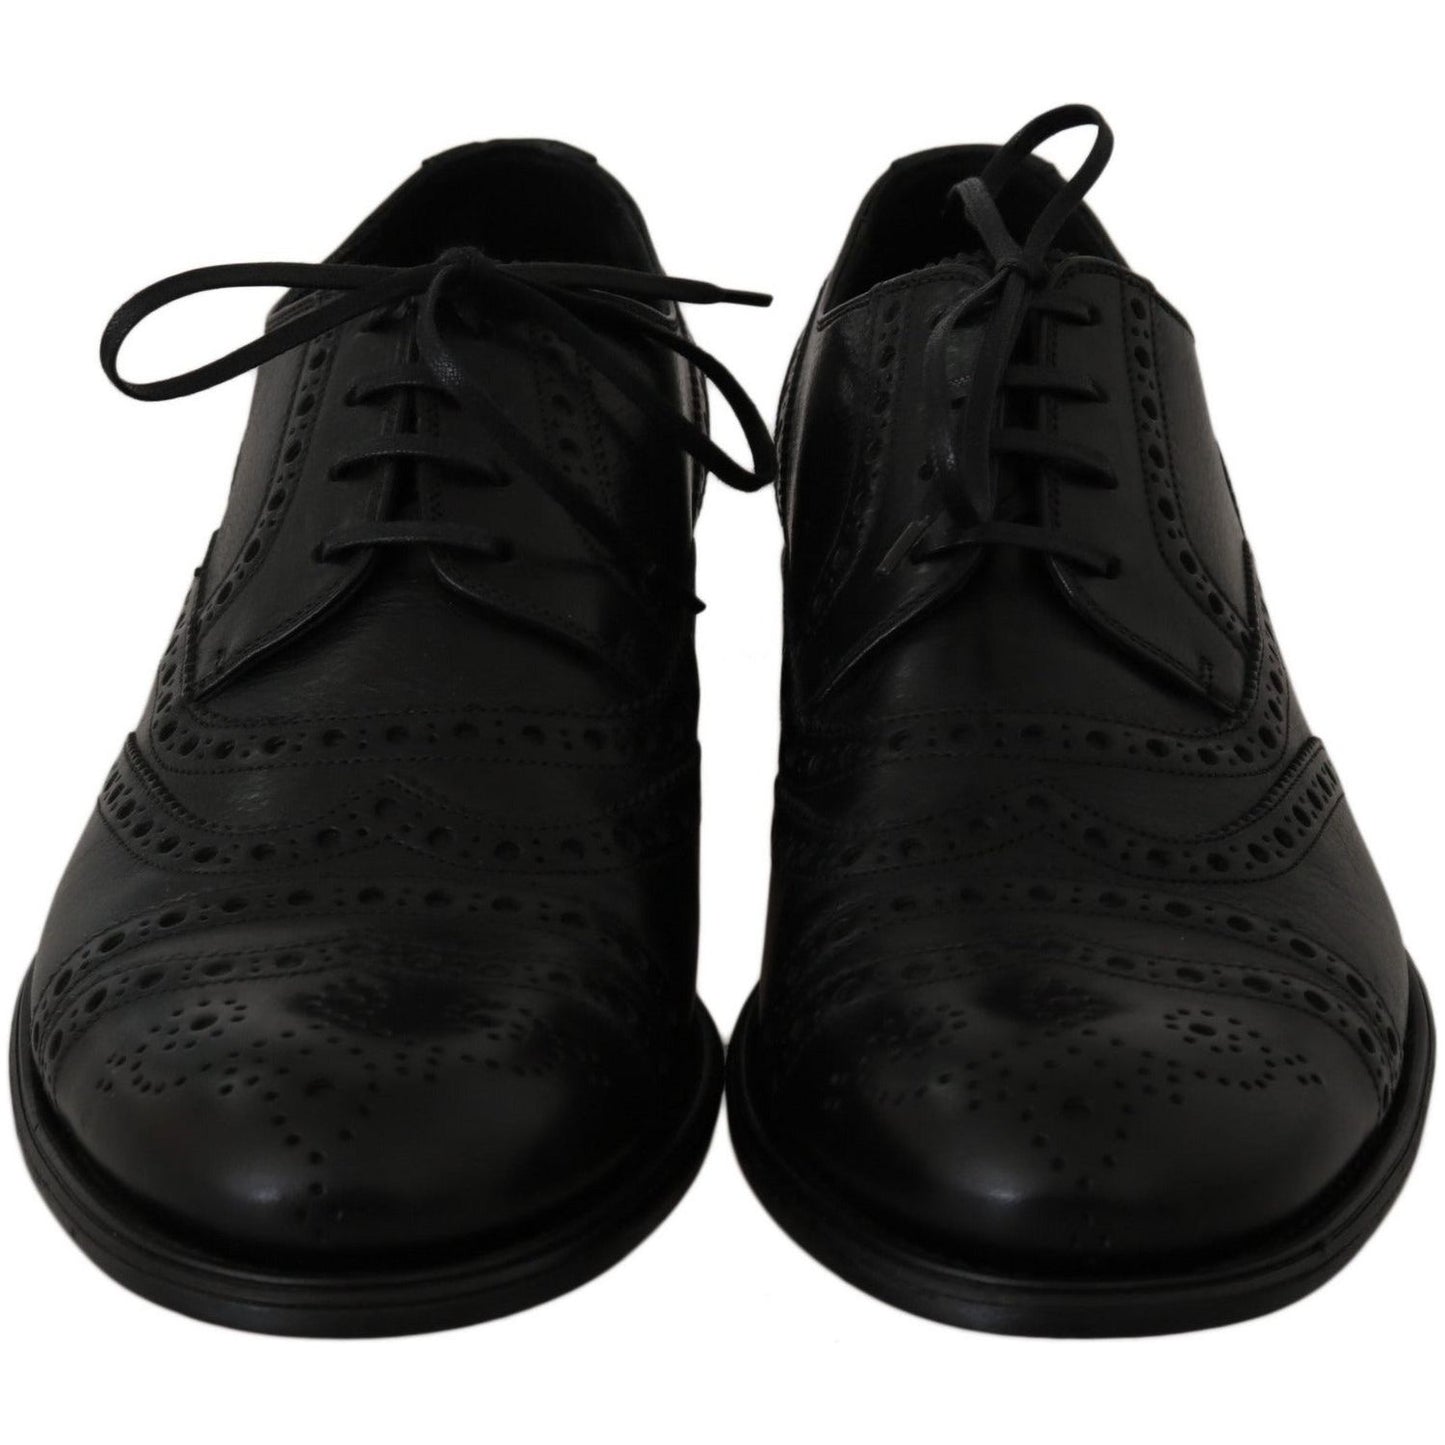 Dolce & Gabbana Elegant Black Leather Derby Wingtip Dress Shoes Dress Shoes black-leather-wingtip-oxford-dress-shoes